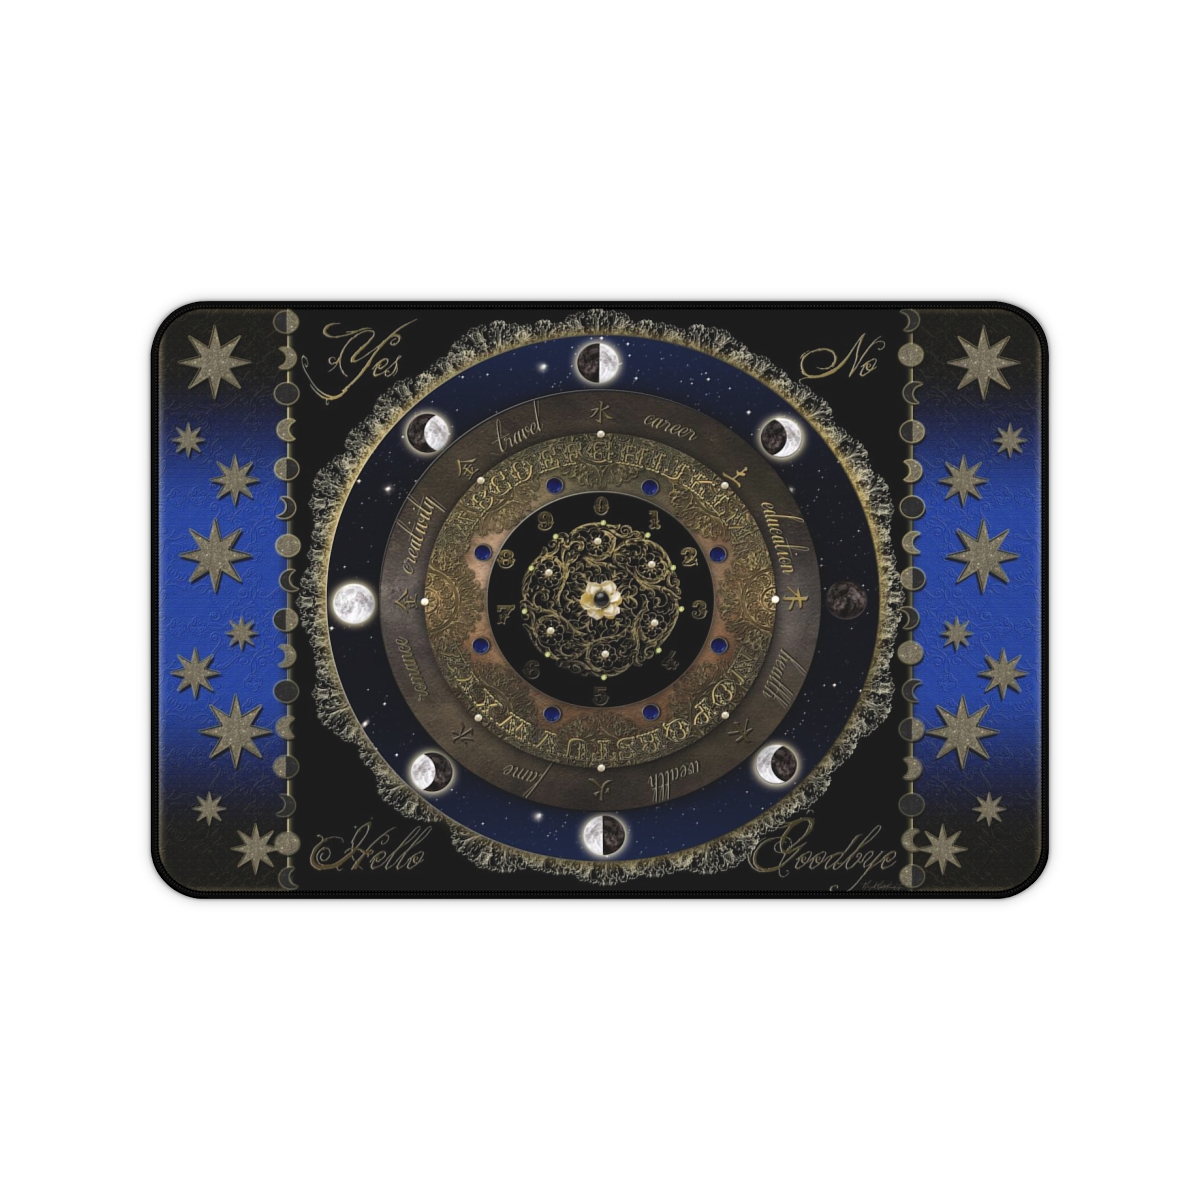 Pendulum Board "Luna Key" 12" x 18" Neoprene Mat product thumbnail image